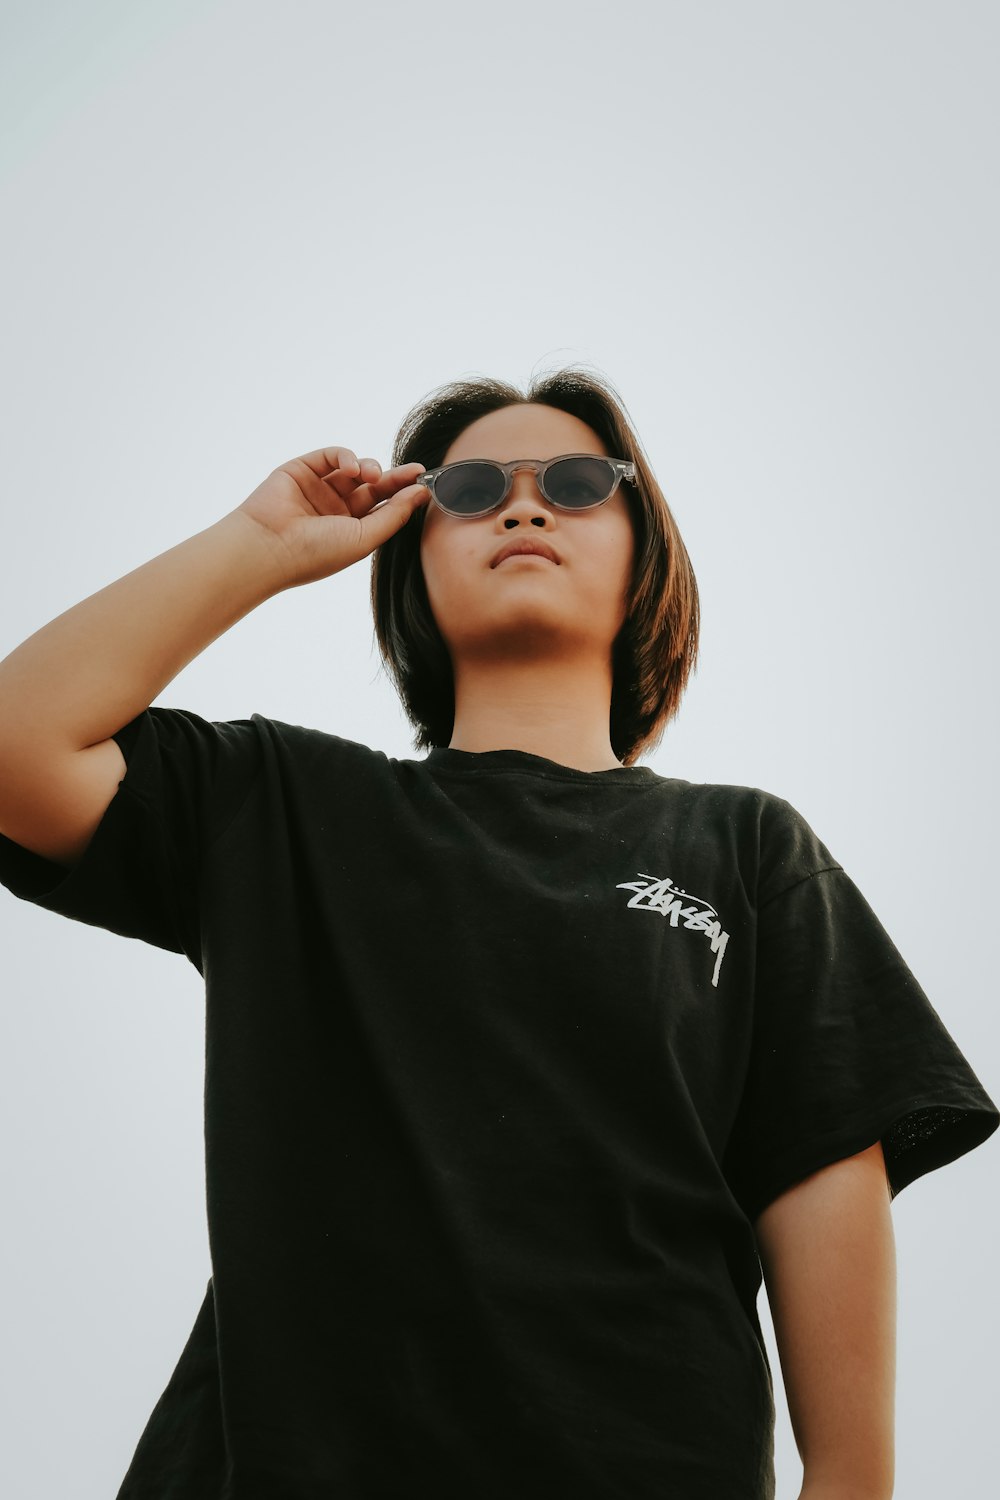 a woman wearing a black shirt and sunglasses